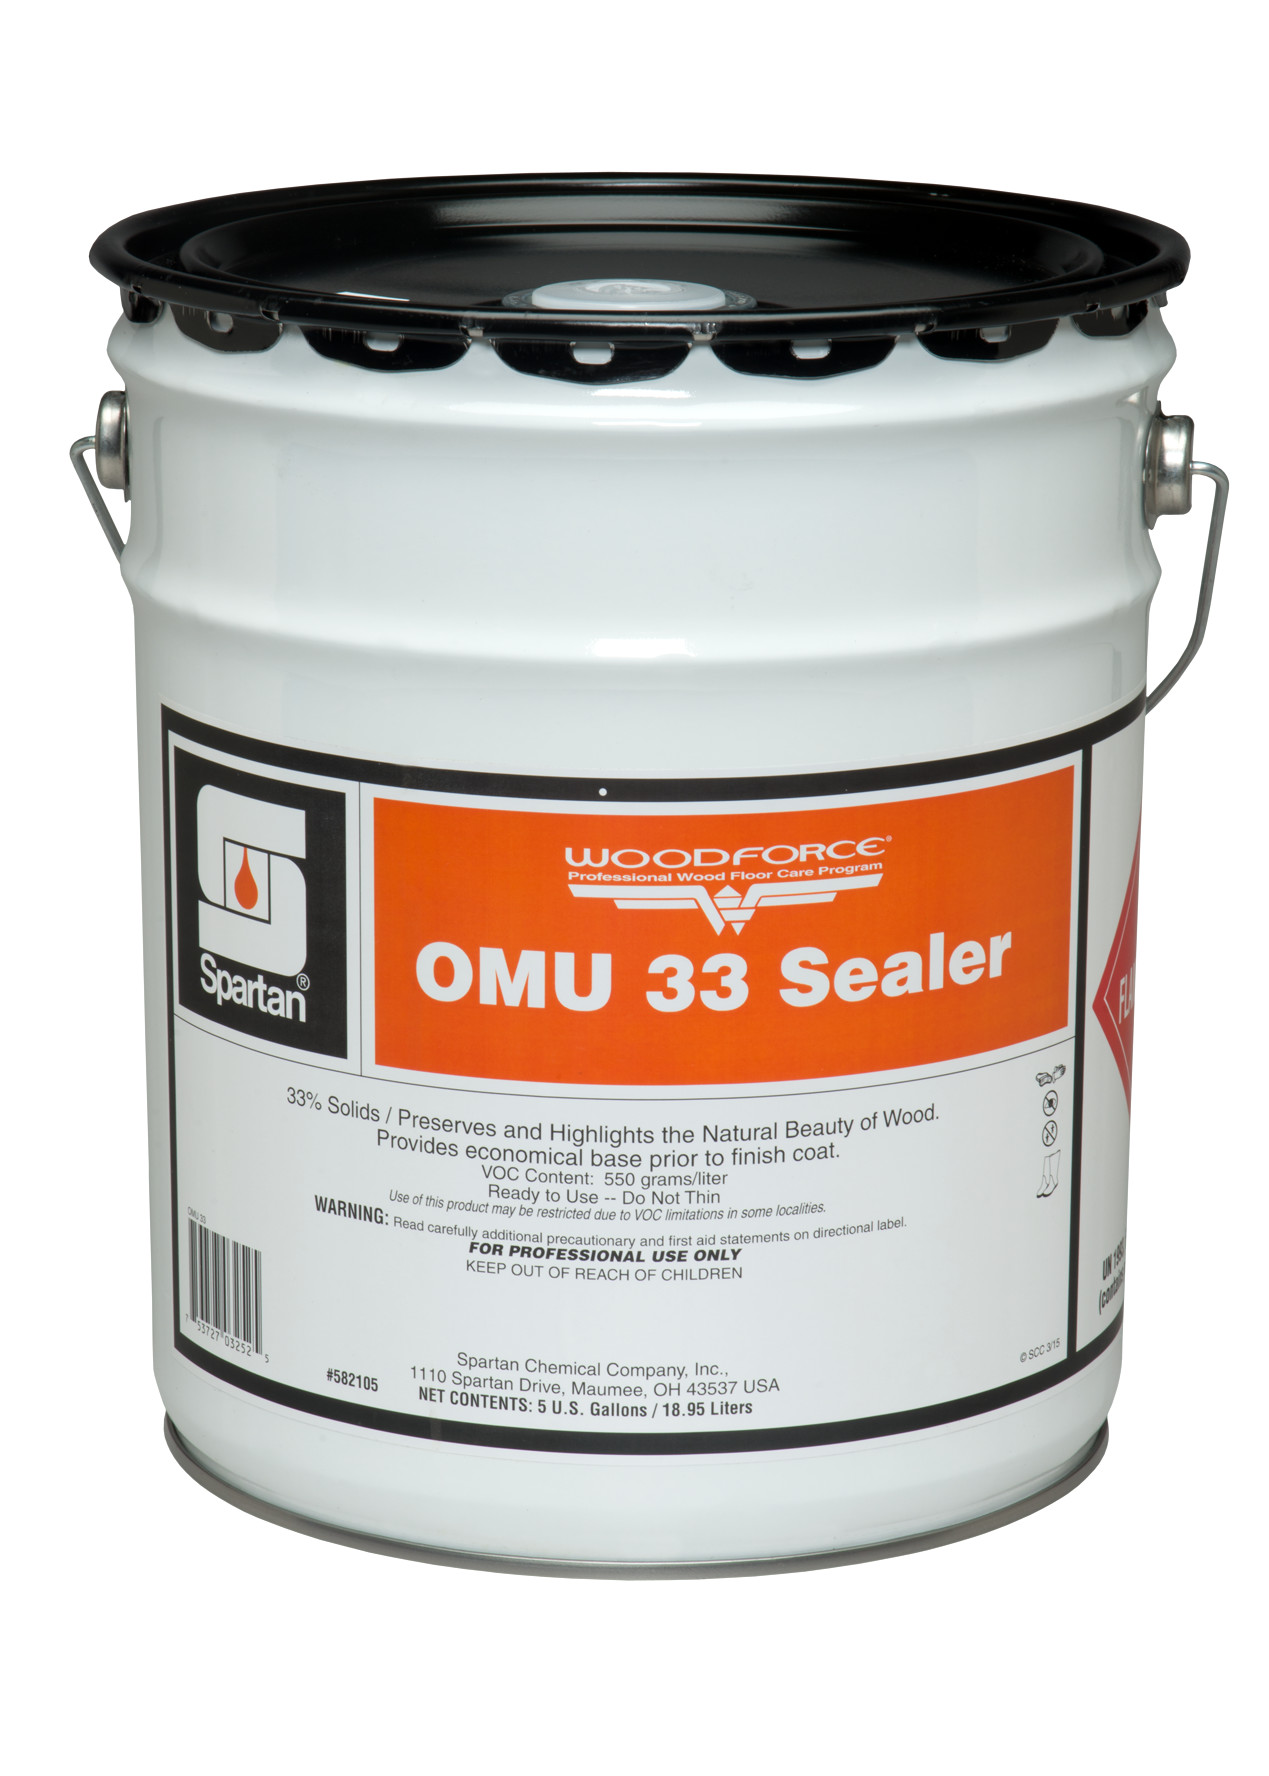 Spartan Chemical Company WOODFORCE OMU-33 Sealer, 5 GAL PAIL